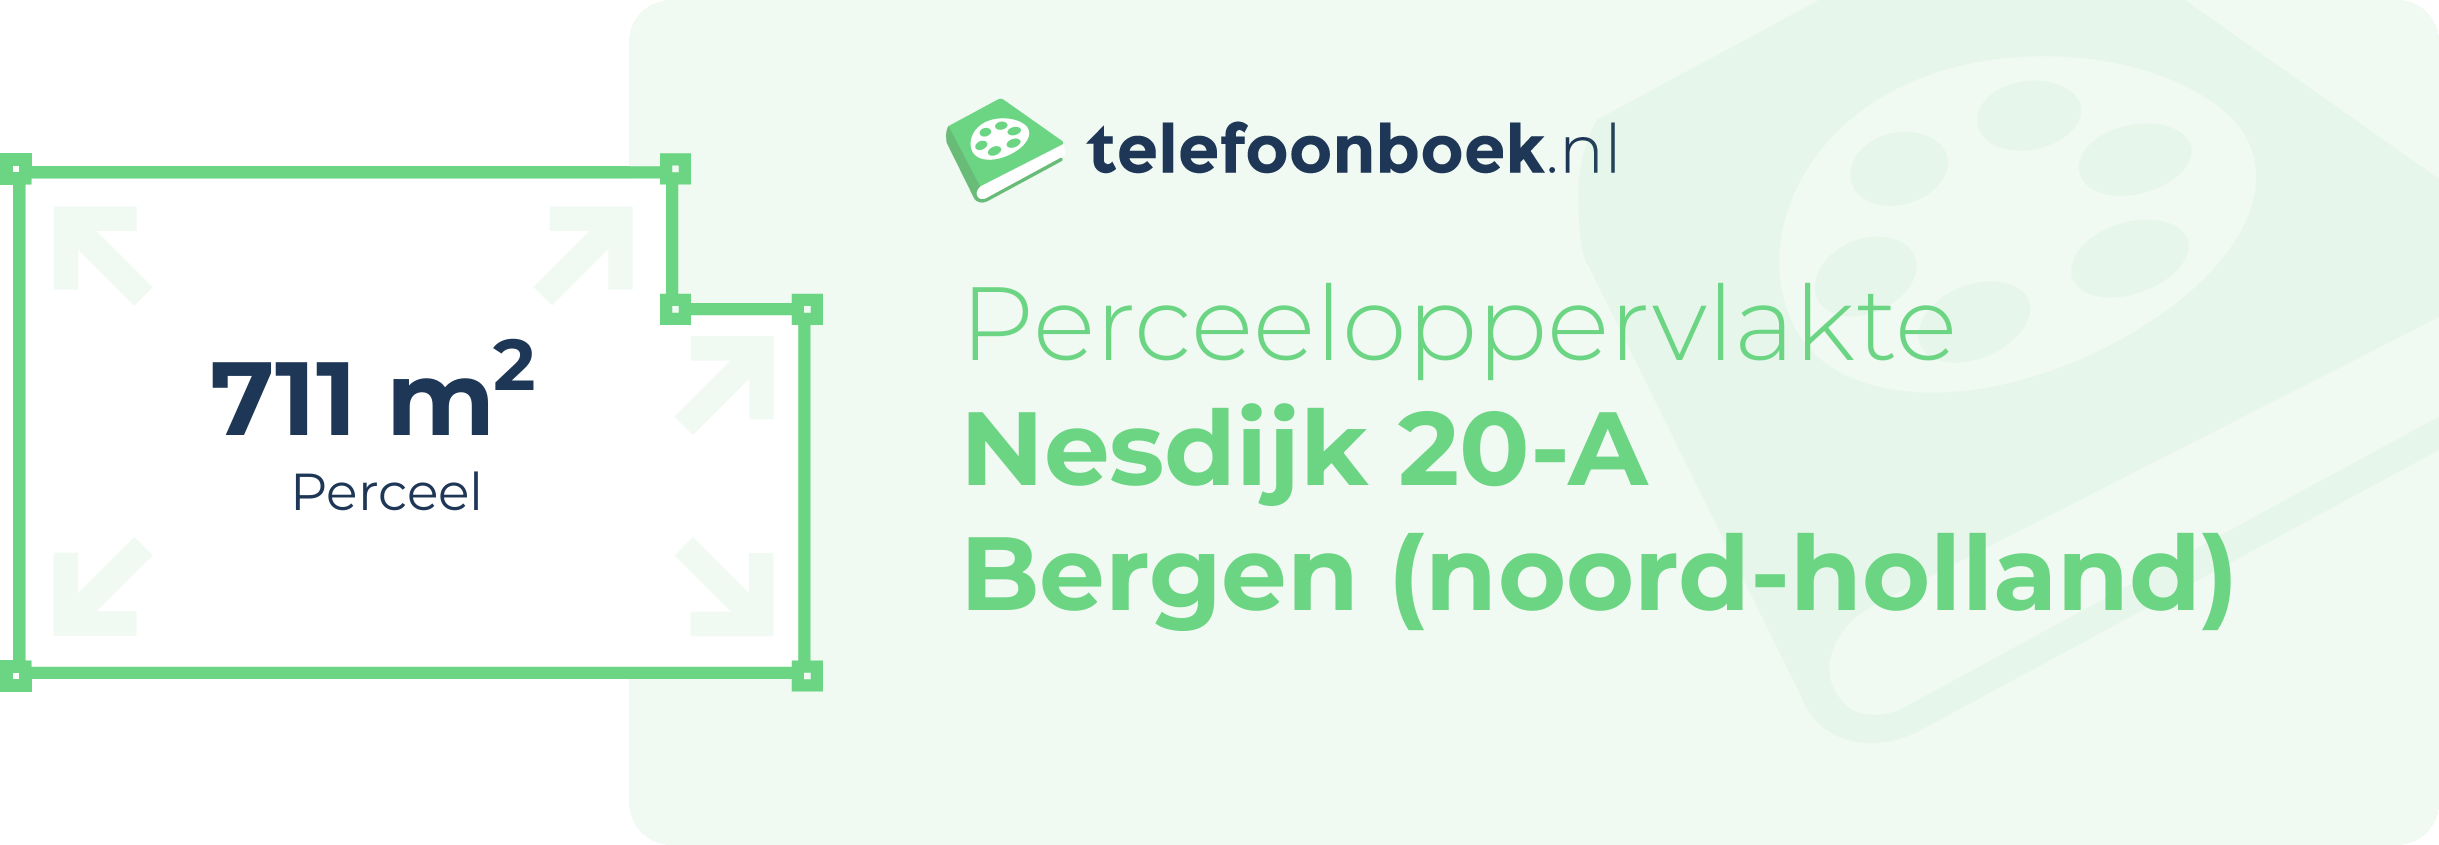 Perceeloppervlakte Nesdijk 20-A Bergen (Noord-Holland)